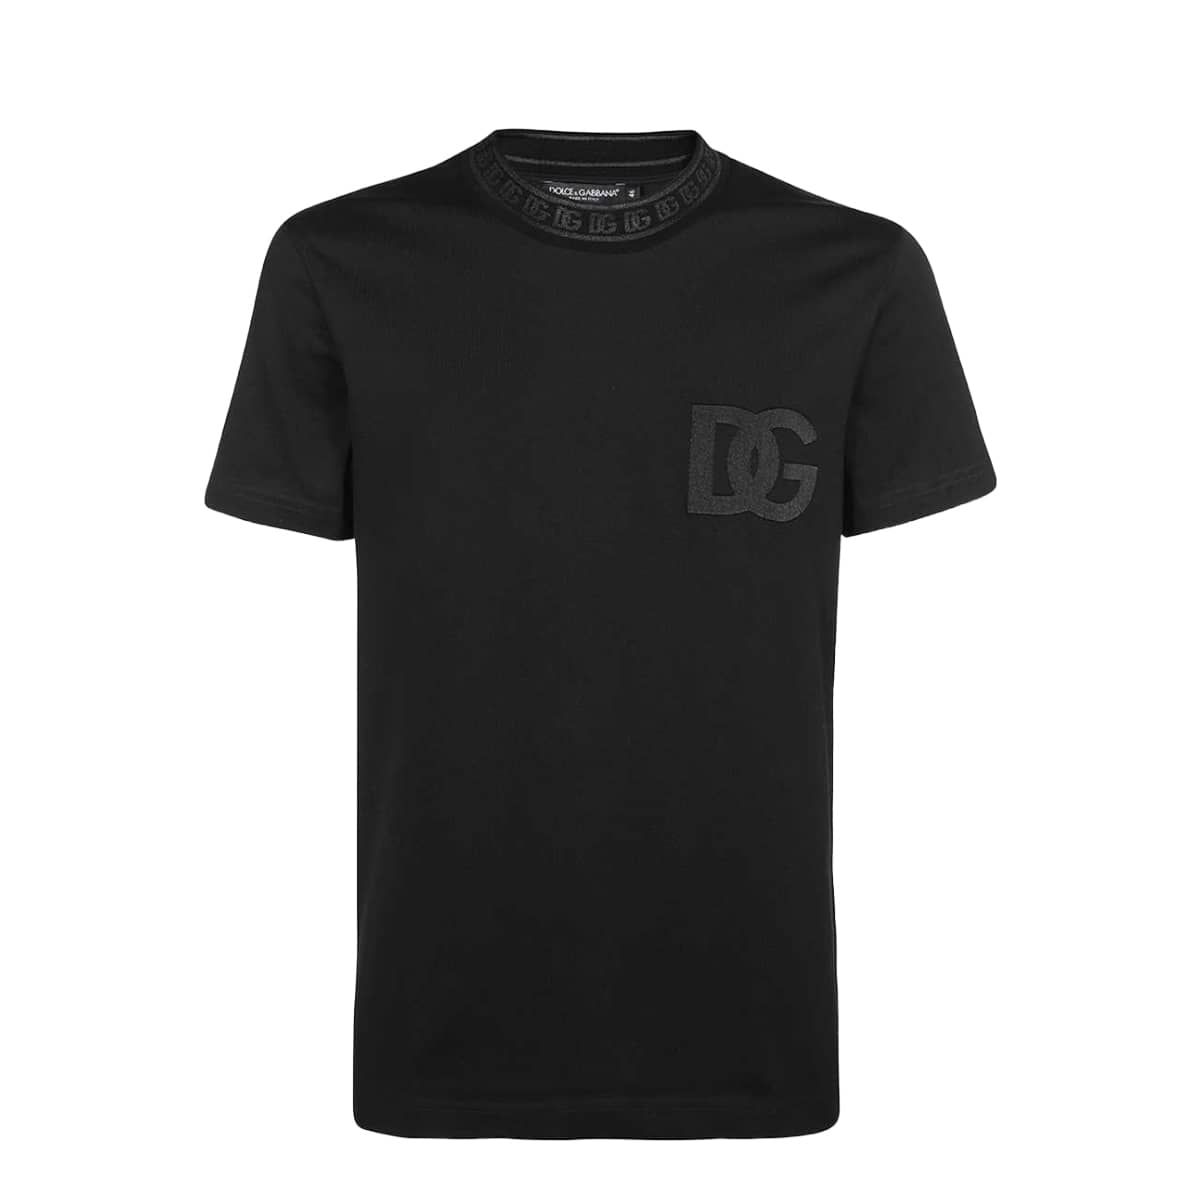 D&G T-shirt Nero / Black